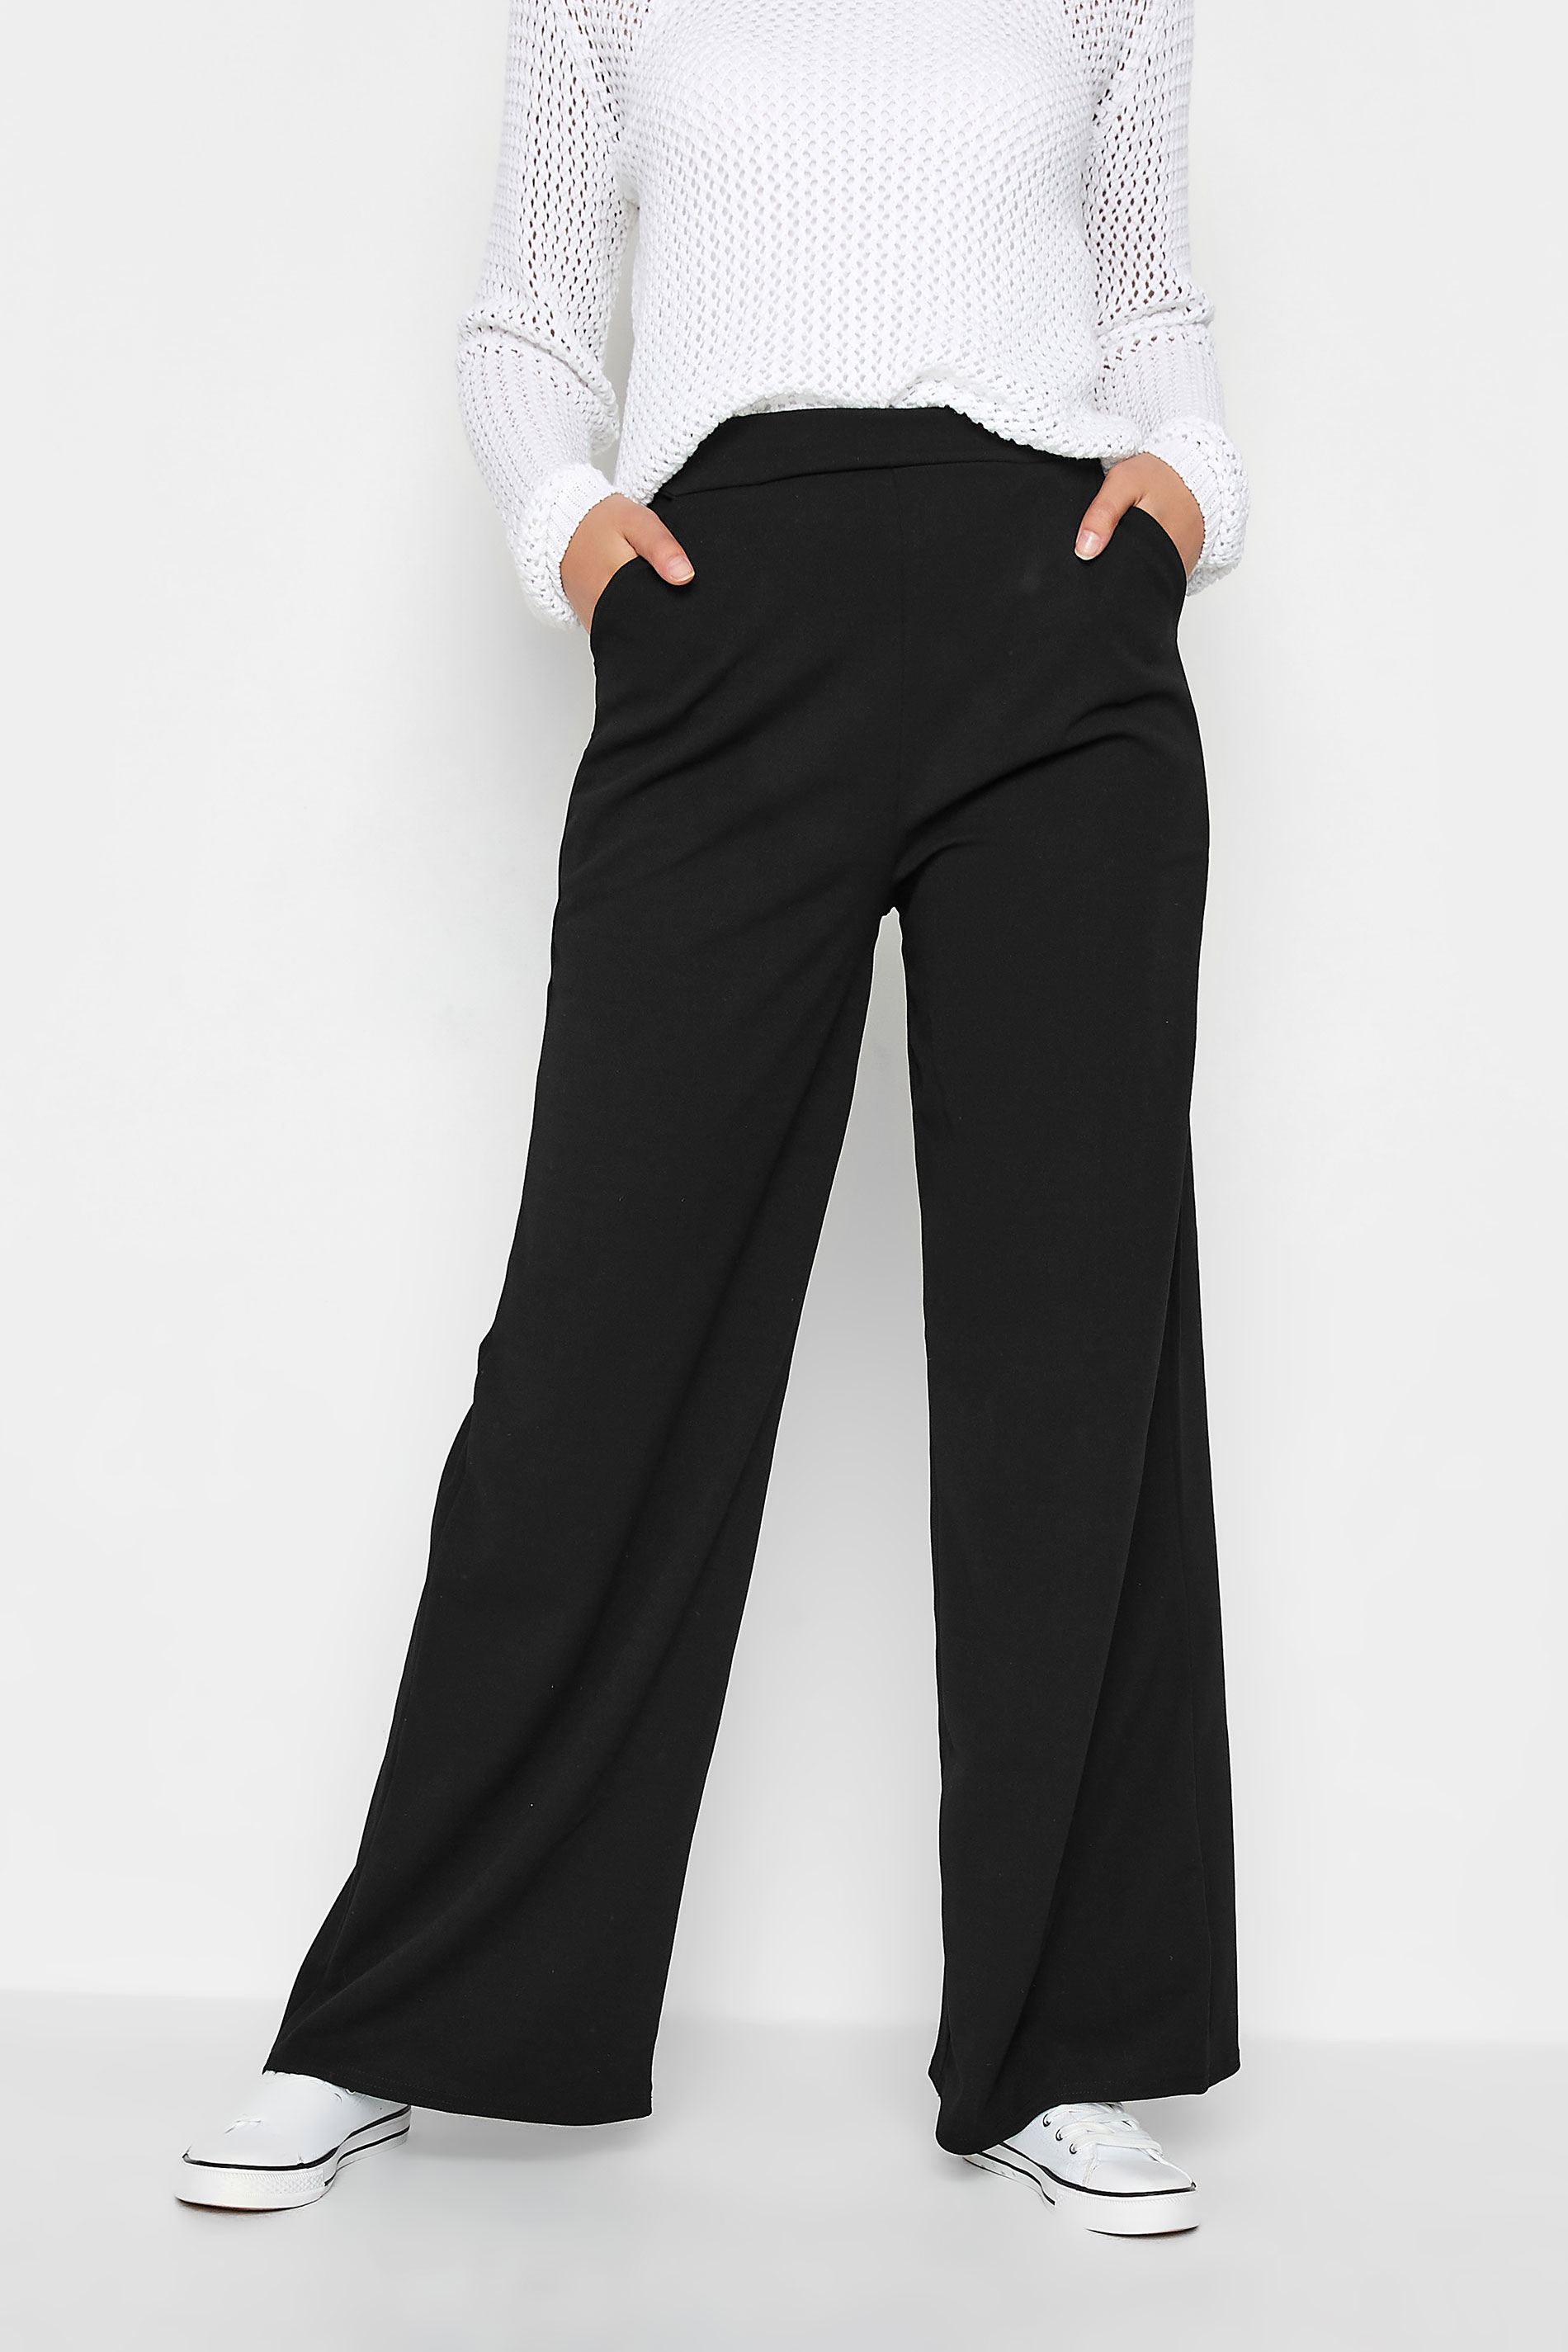 LTS Tall Women's Black Scuba Wide Leg Trousers | Long Tall Sally 1